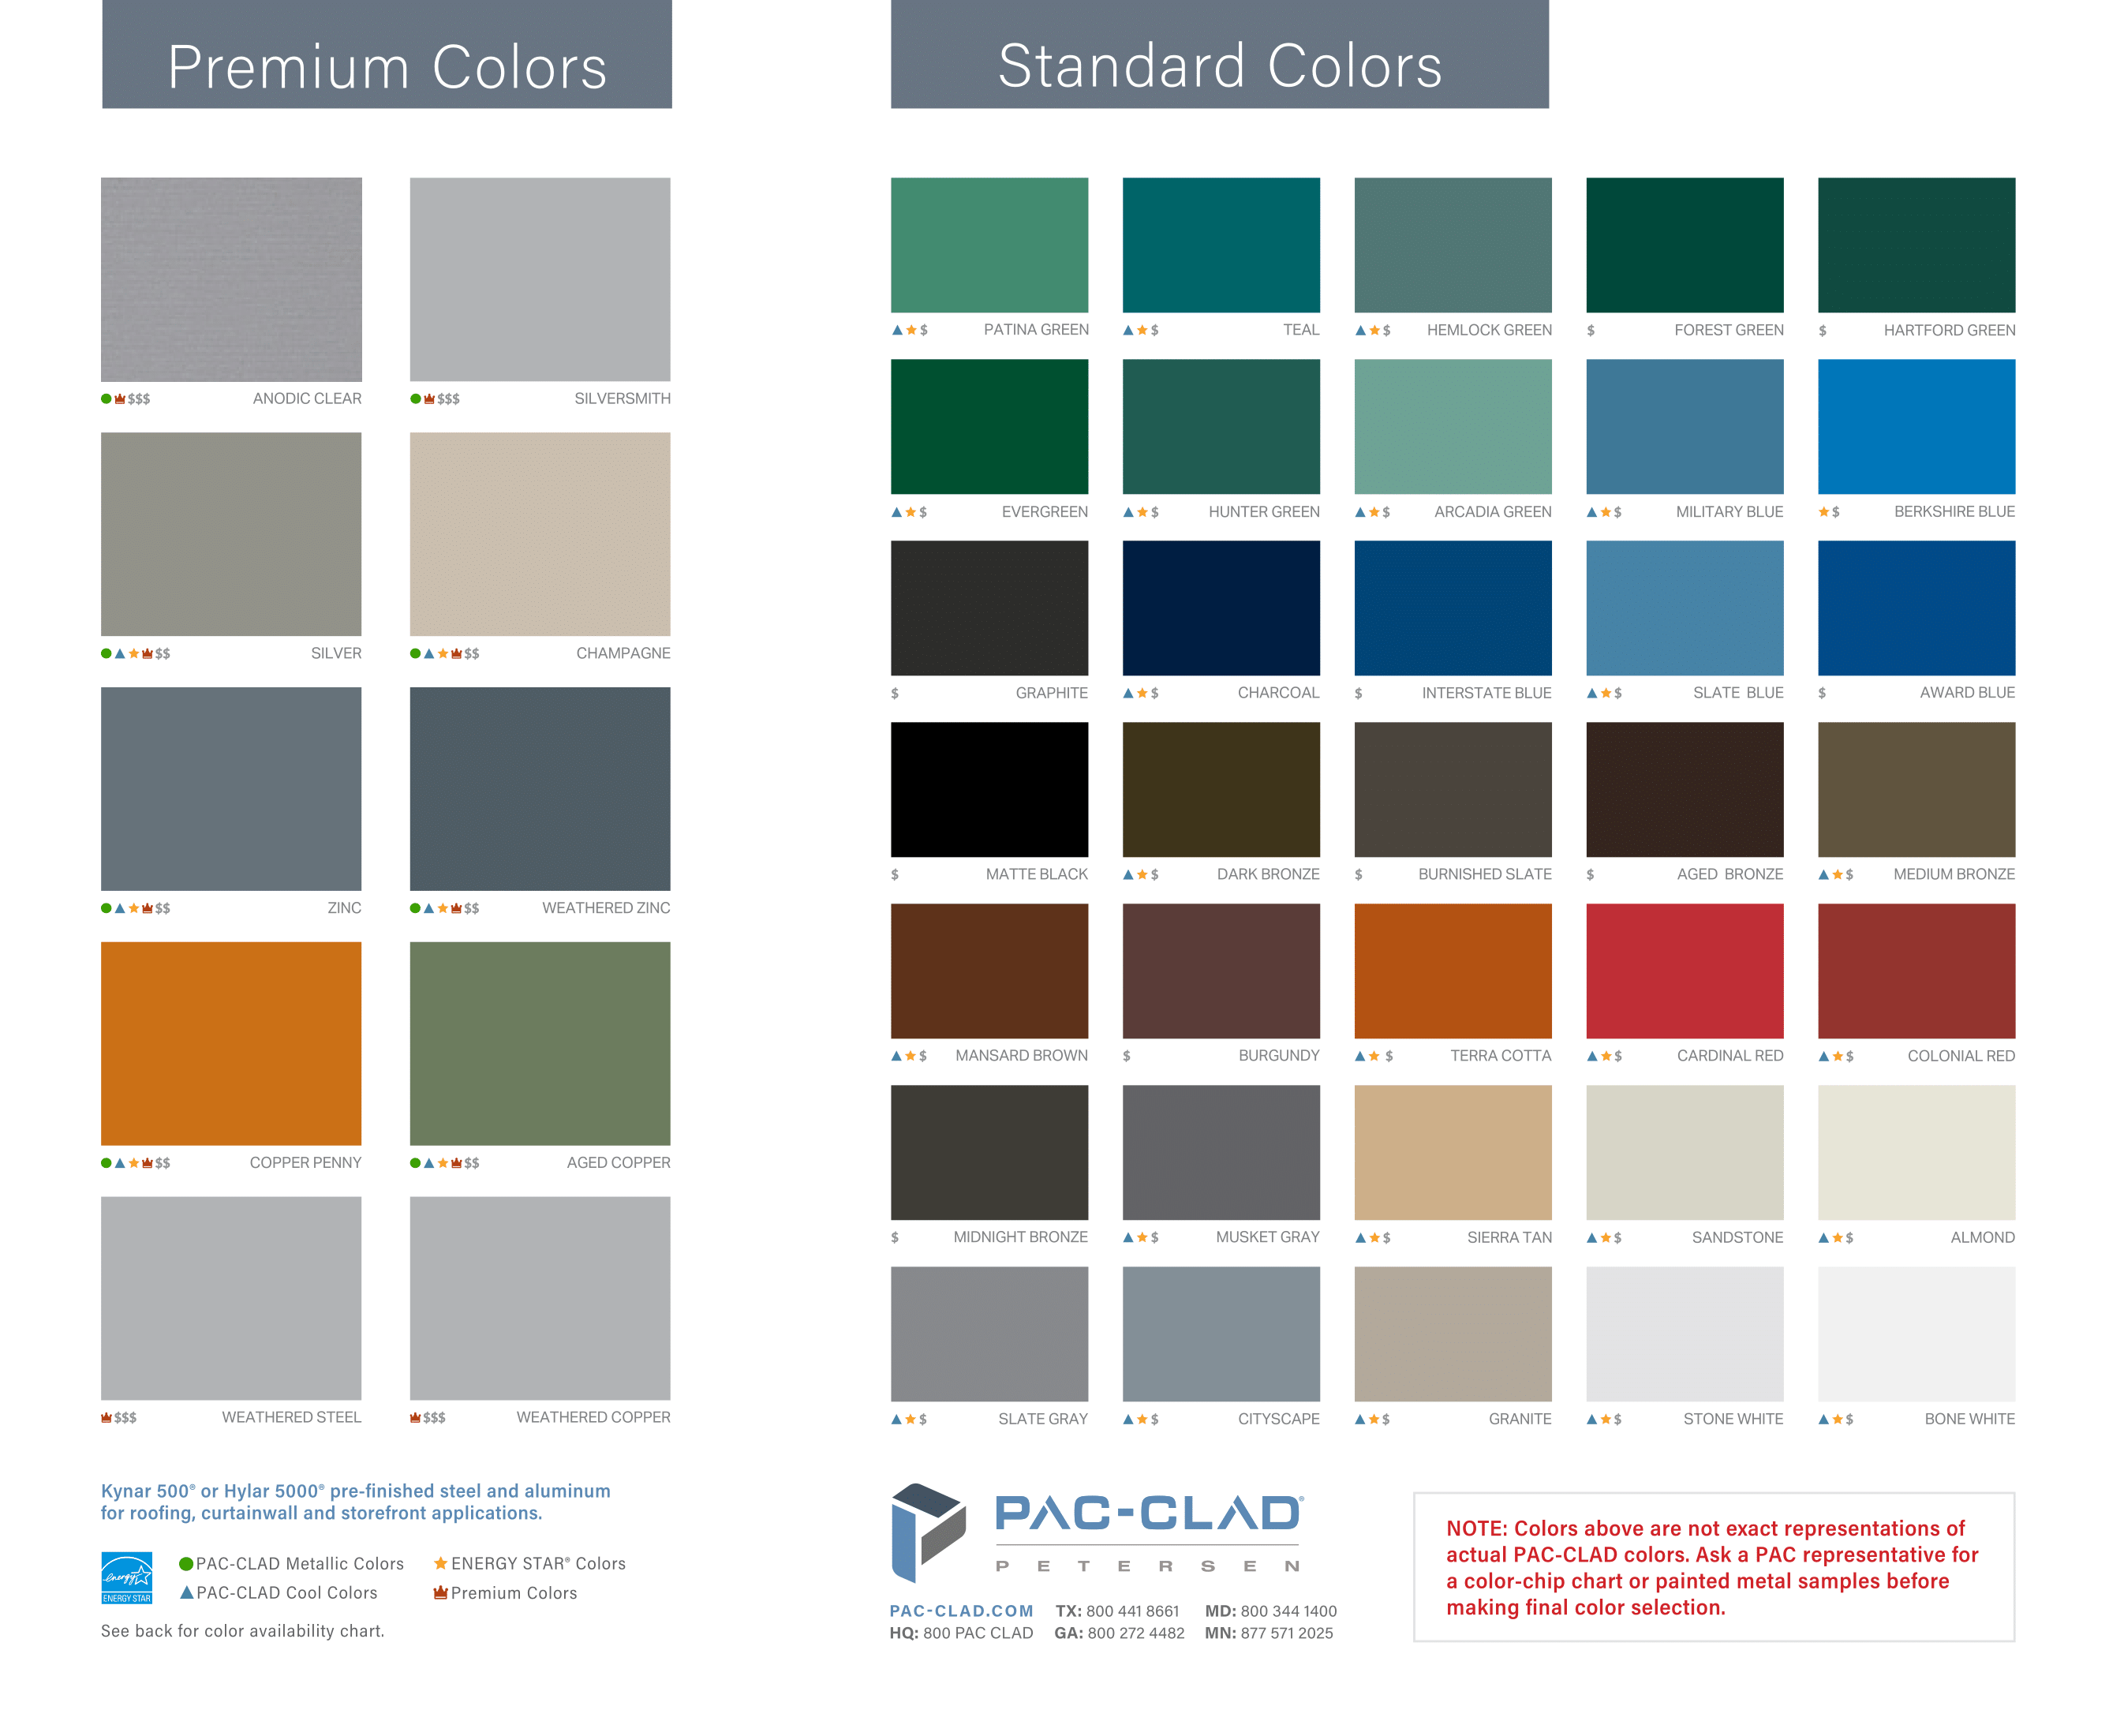 Methuen Color Chart